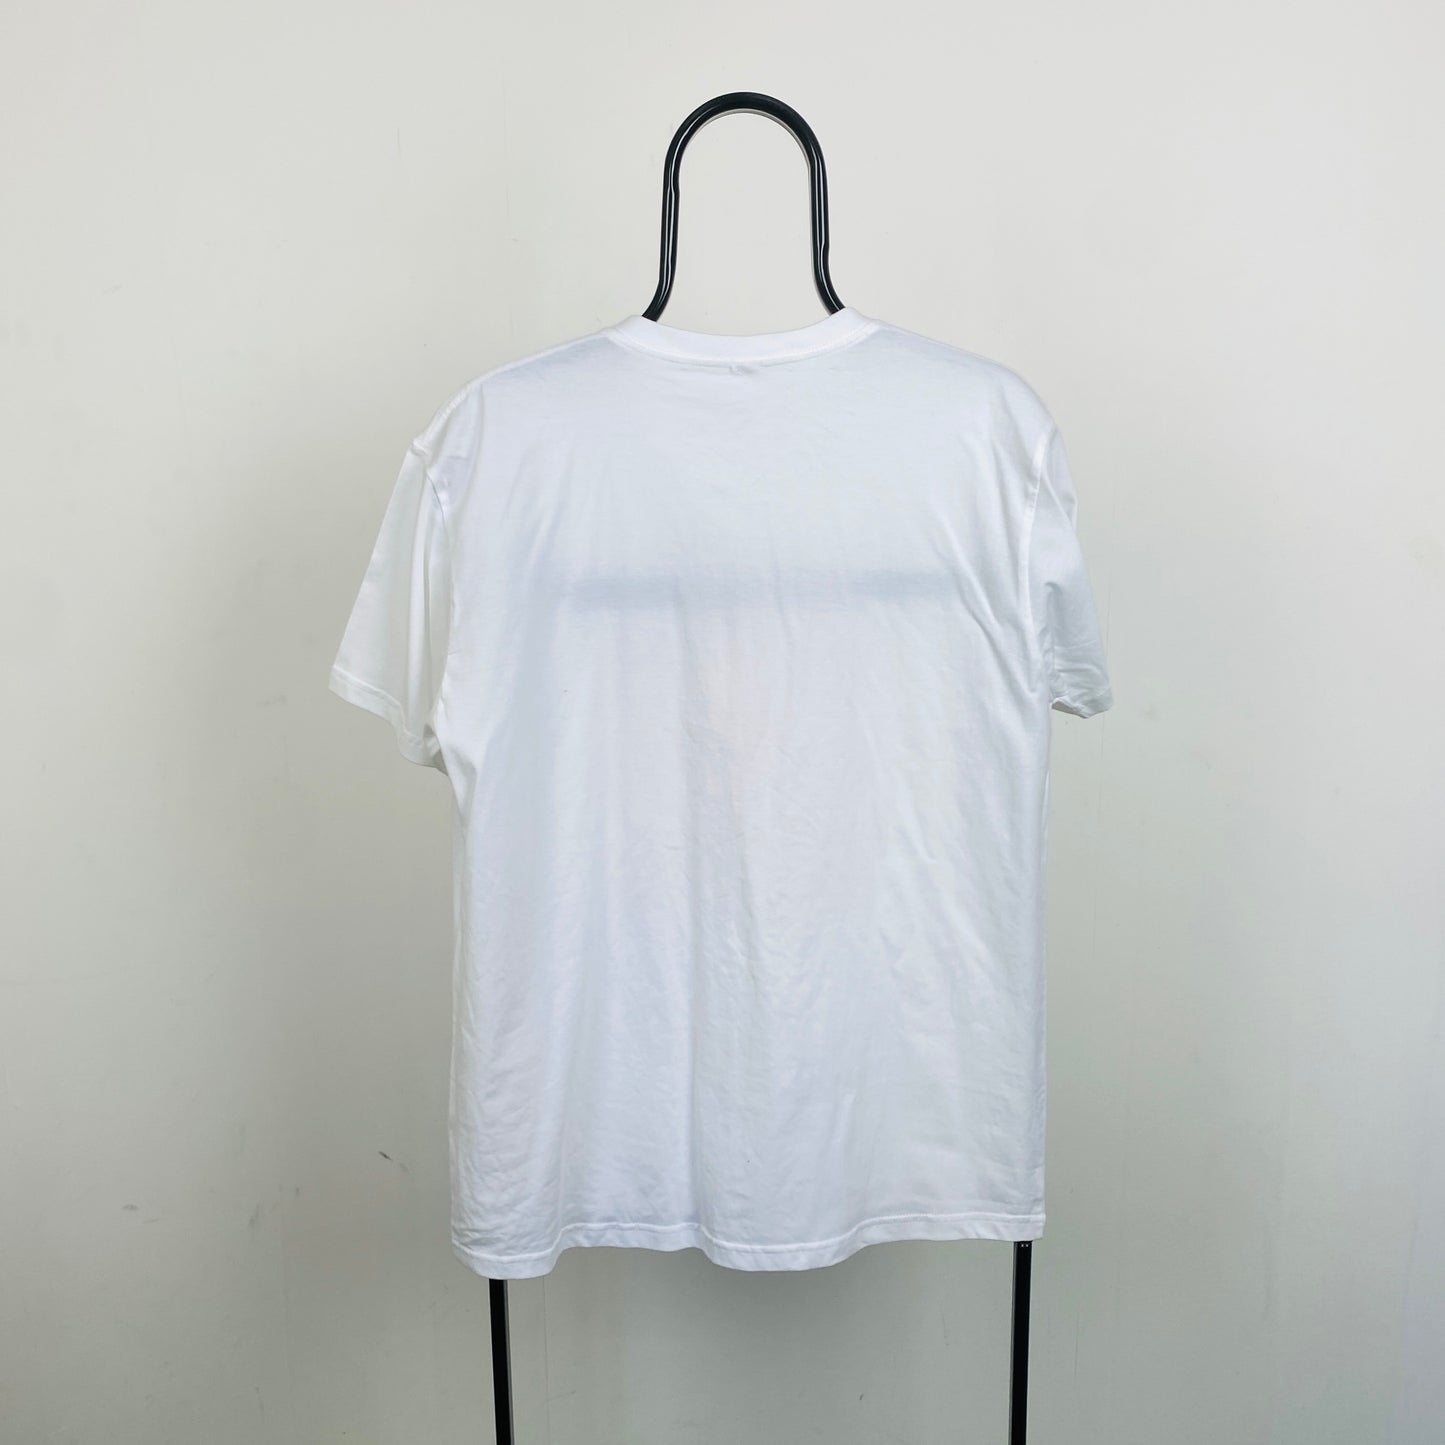 Retro Peach T-Shirt White Medium